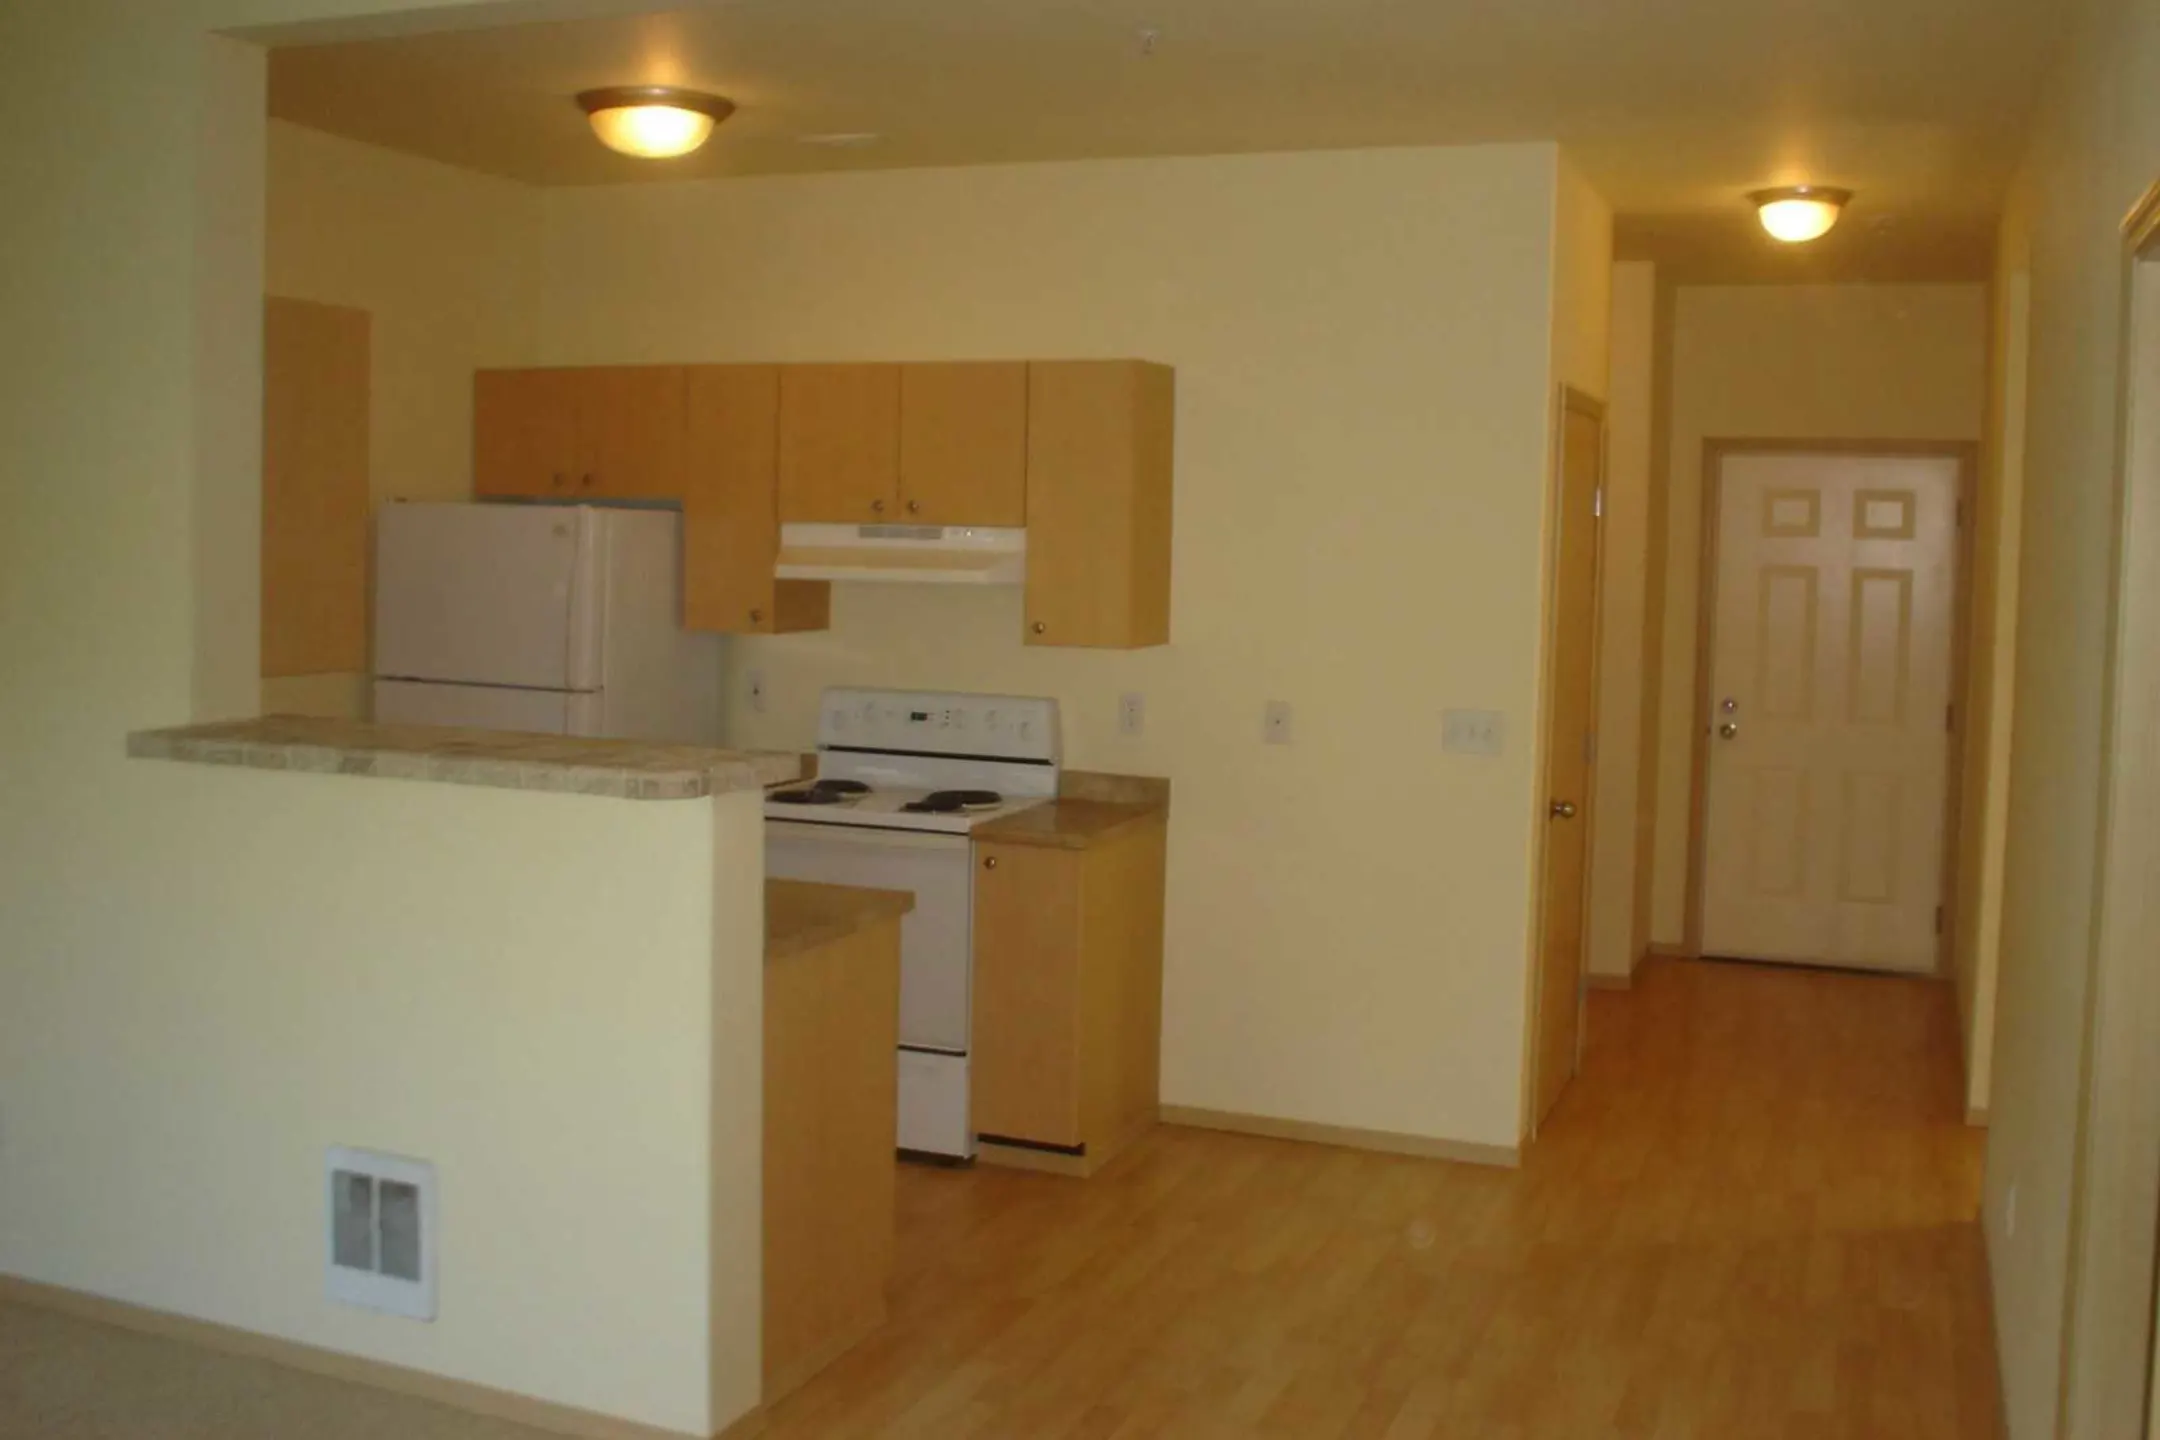 Kitchen - The Oasis Apartments - Tacoma, WA